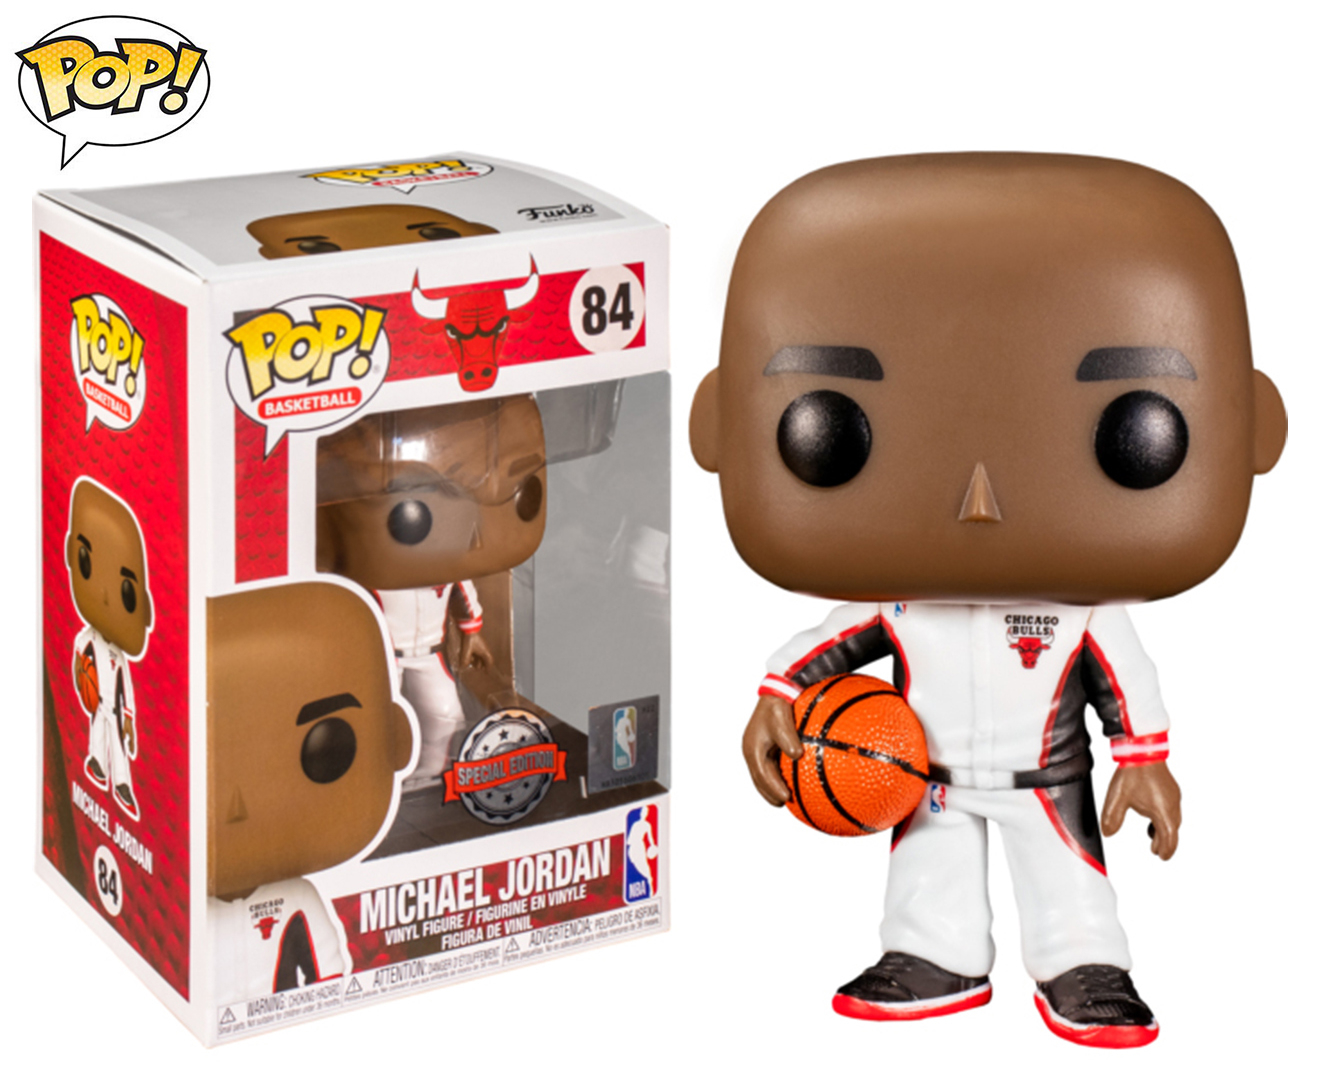 Funko Pop! Basketball Chicago Bulls Michael Jordan 10 Vinyl Figure